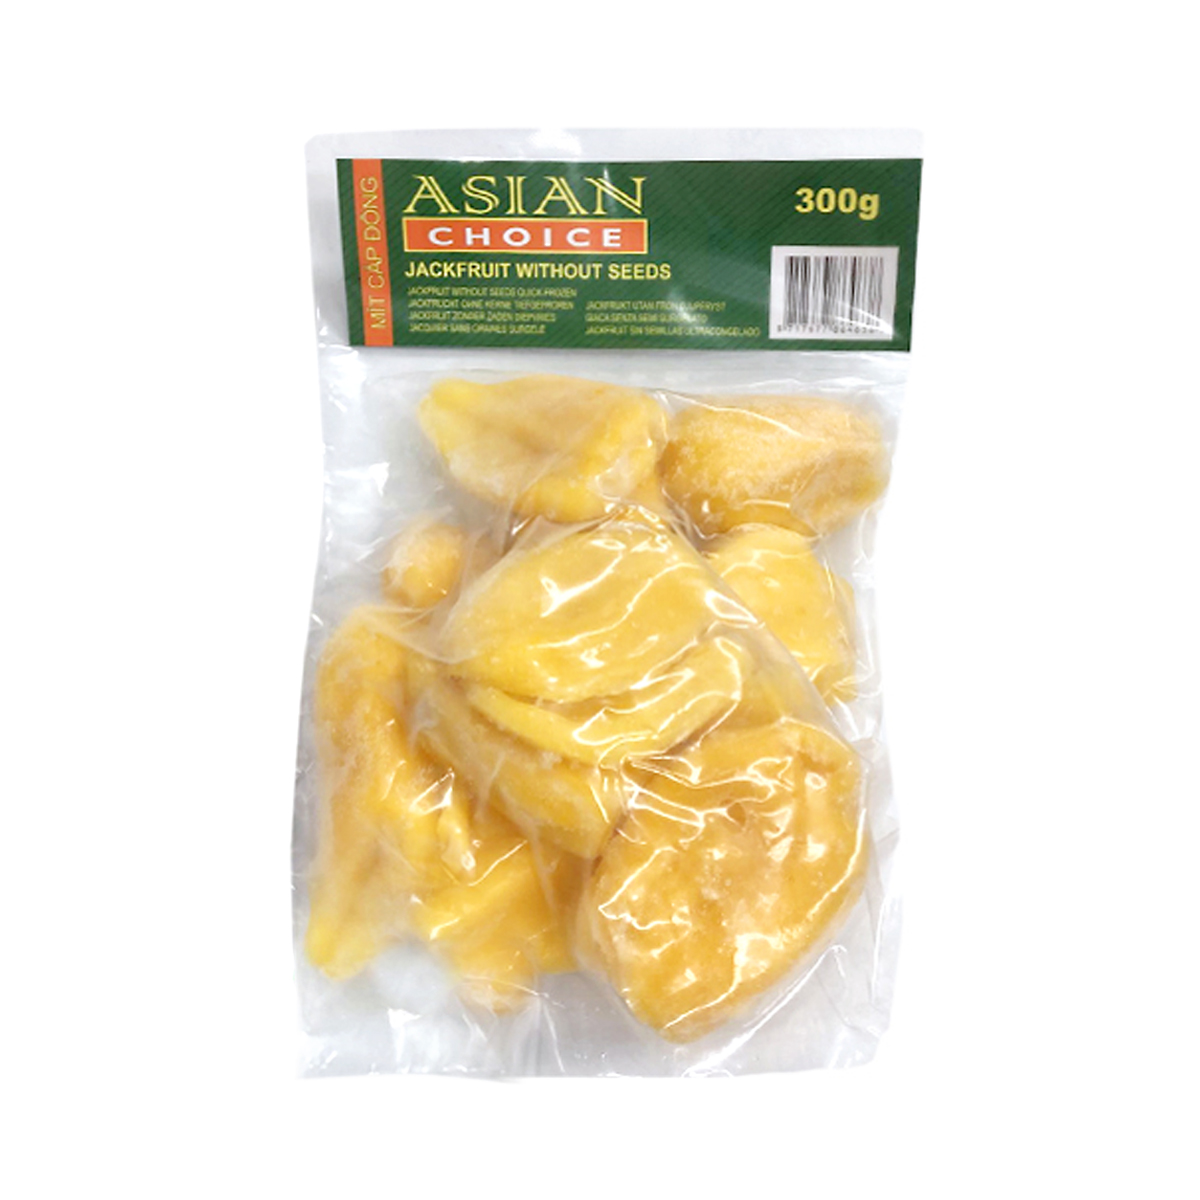 Exclusiv in magazine - Jackfruit fara seminte Asian Choice 300g, asianfood.ro